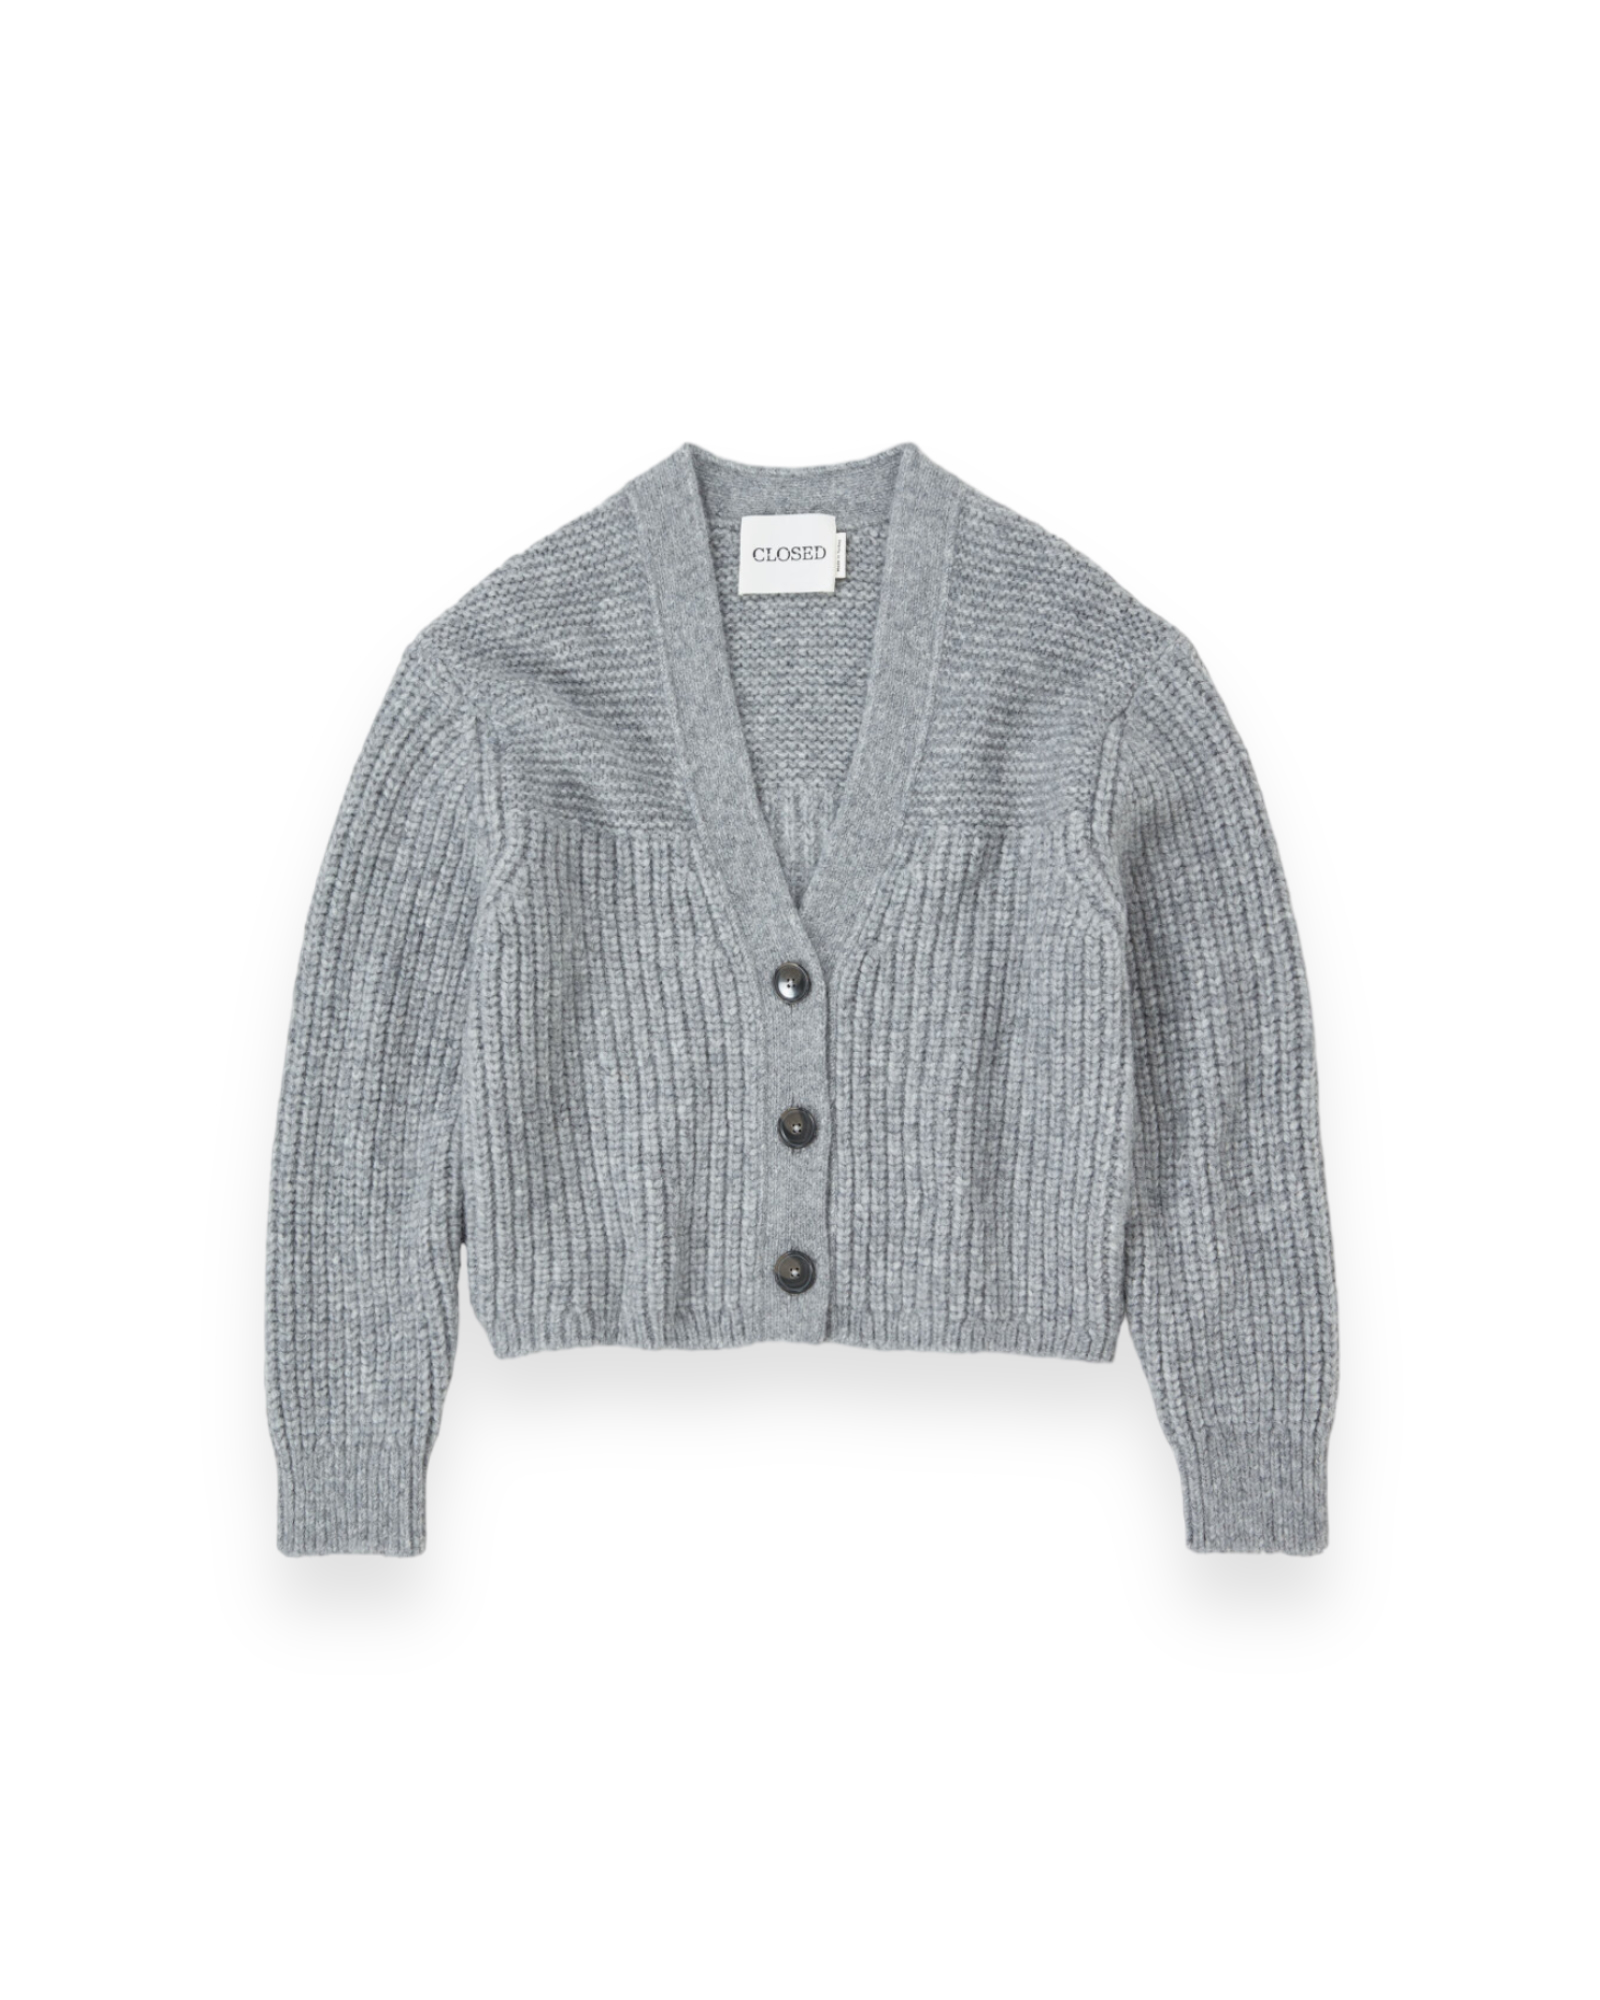 Cardigan heavy knit in light grey, CLOSED